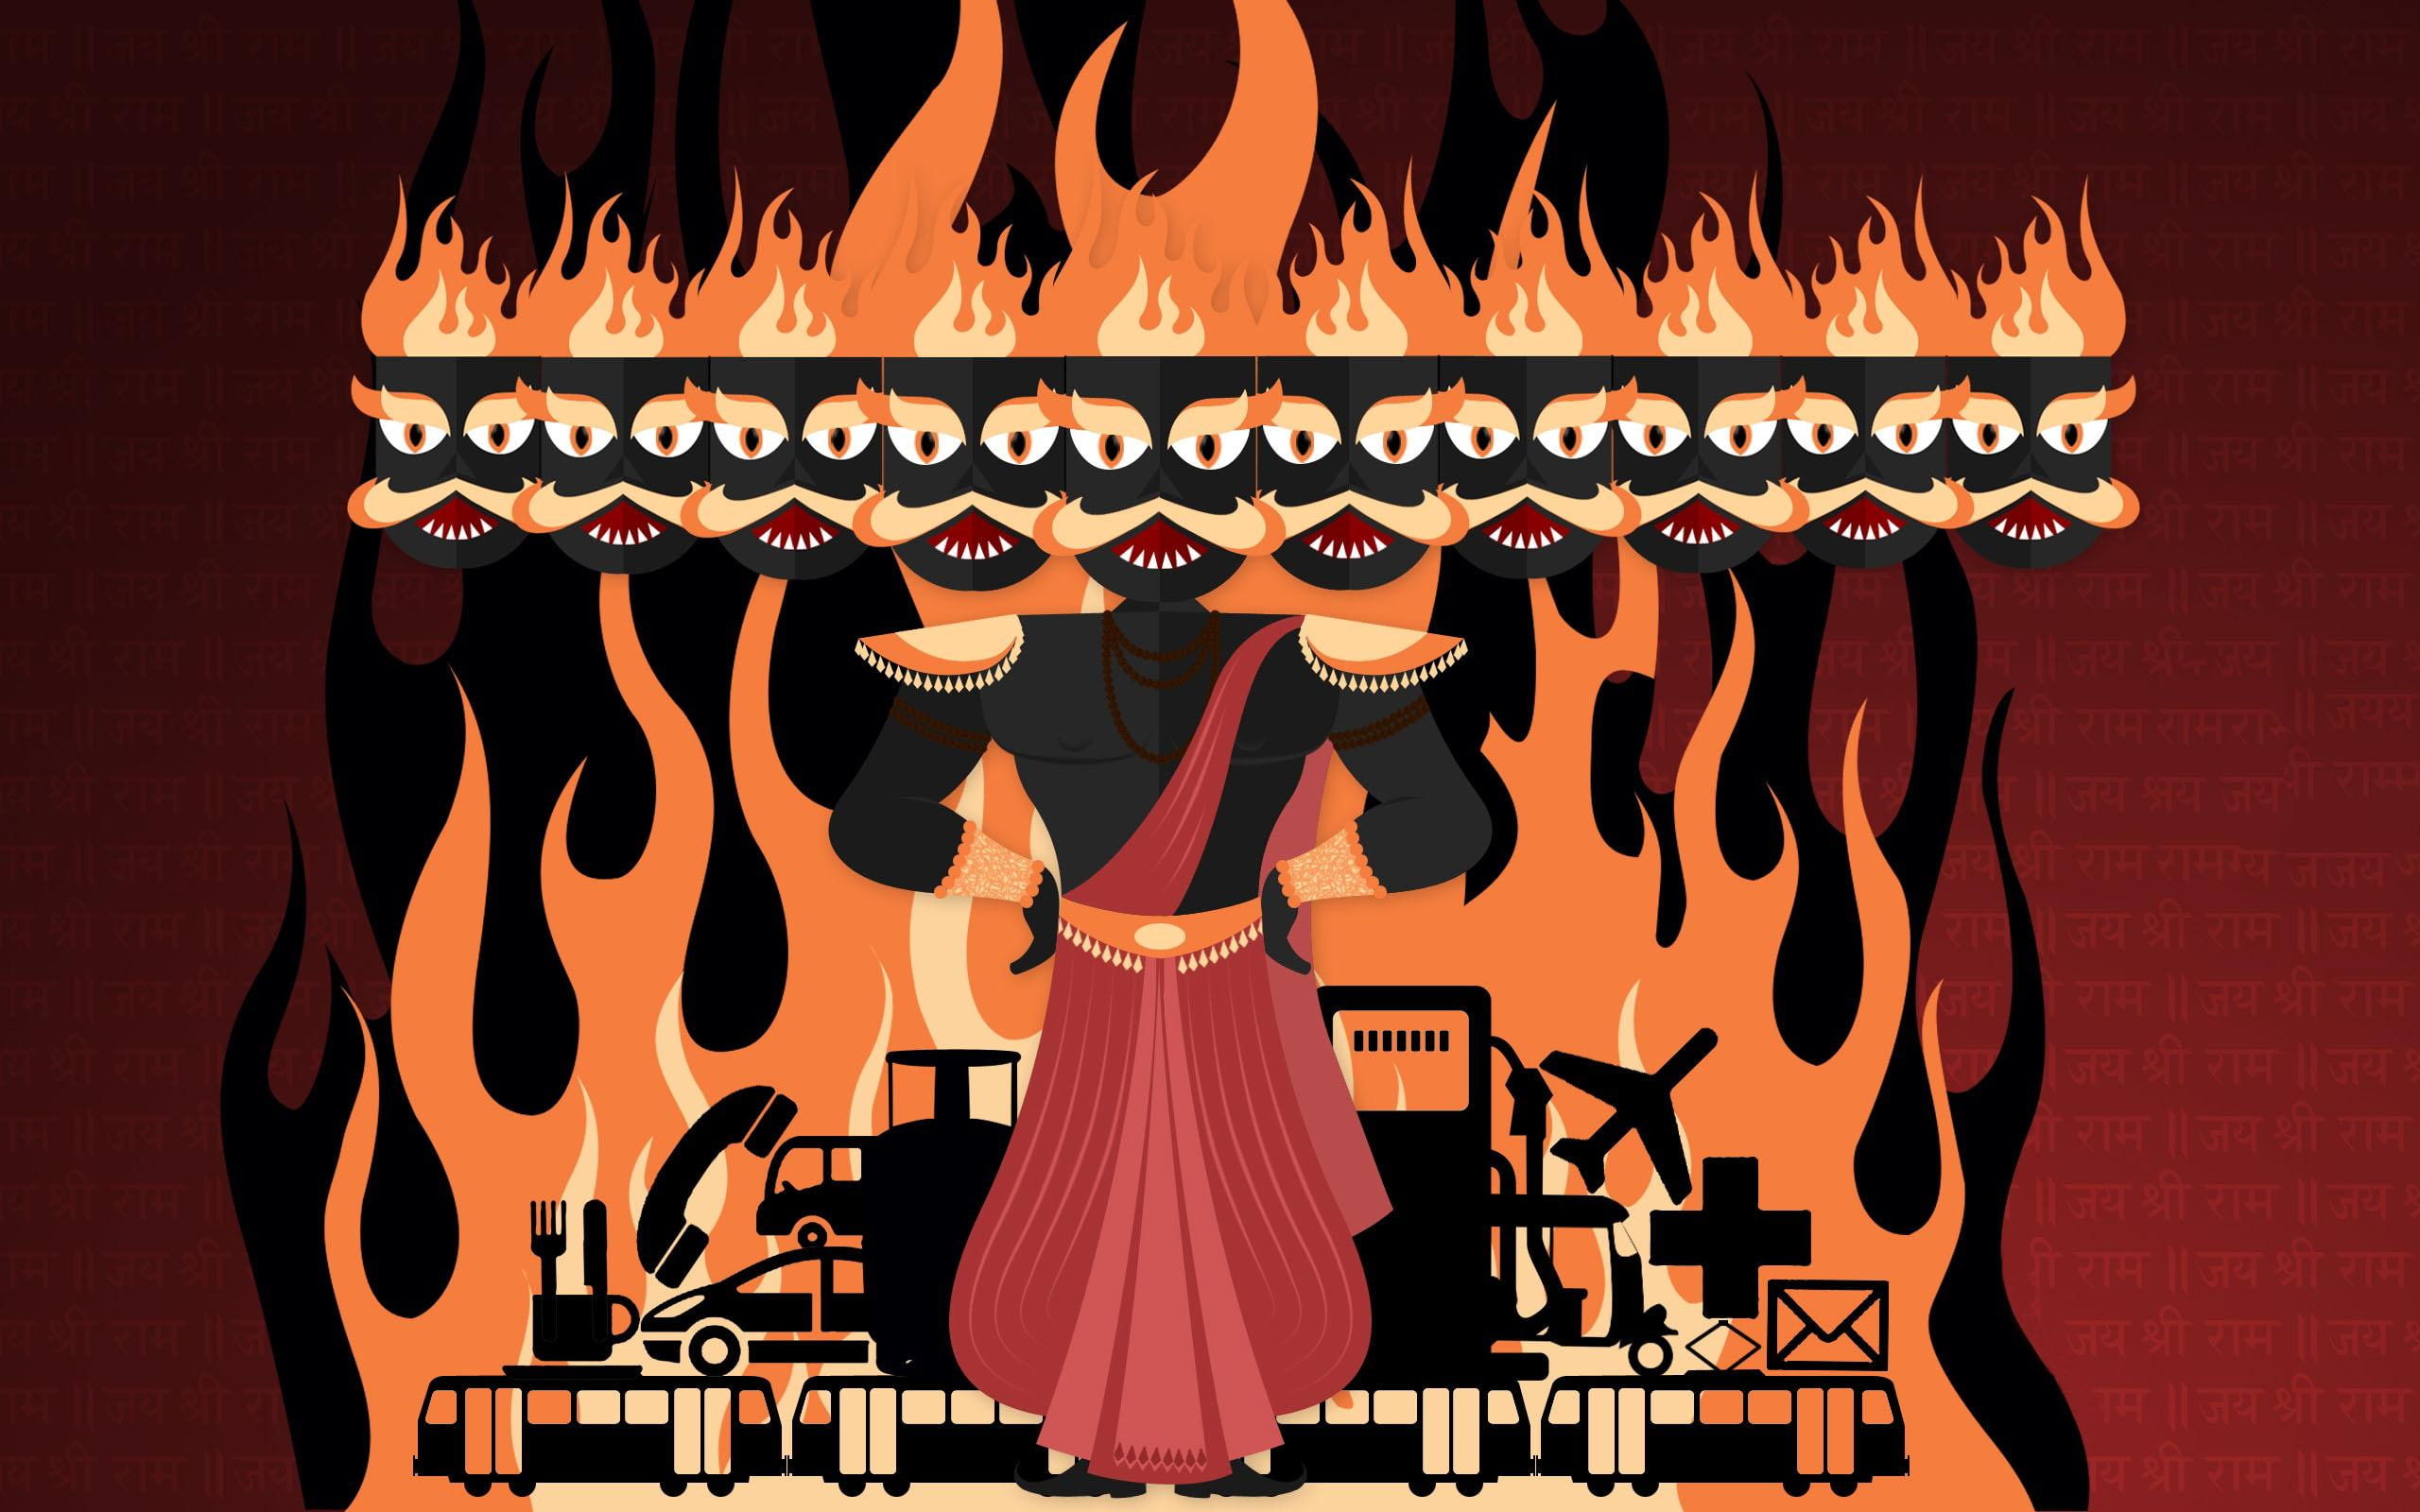 Happy Dussehra 2014, orange black and white flames cartoon character artwork